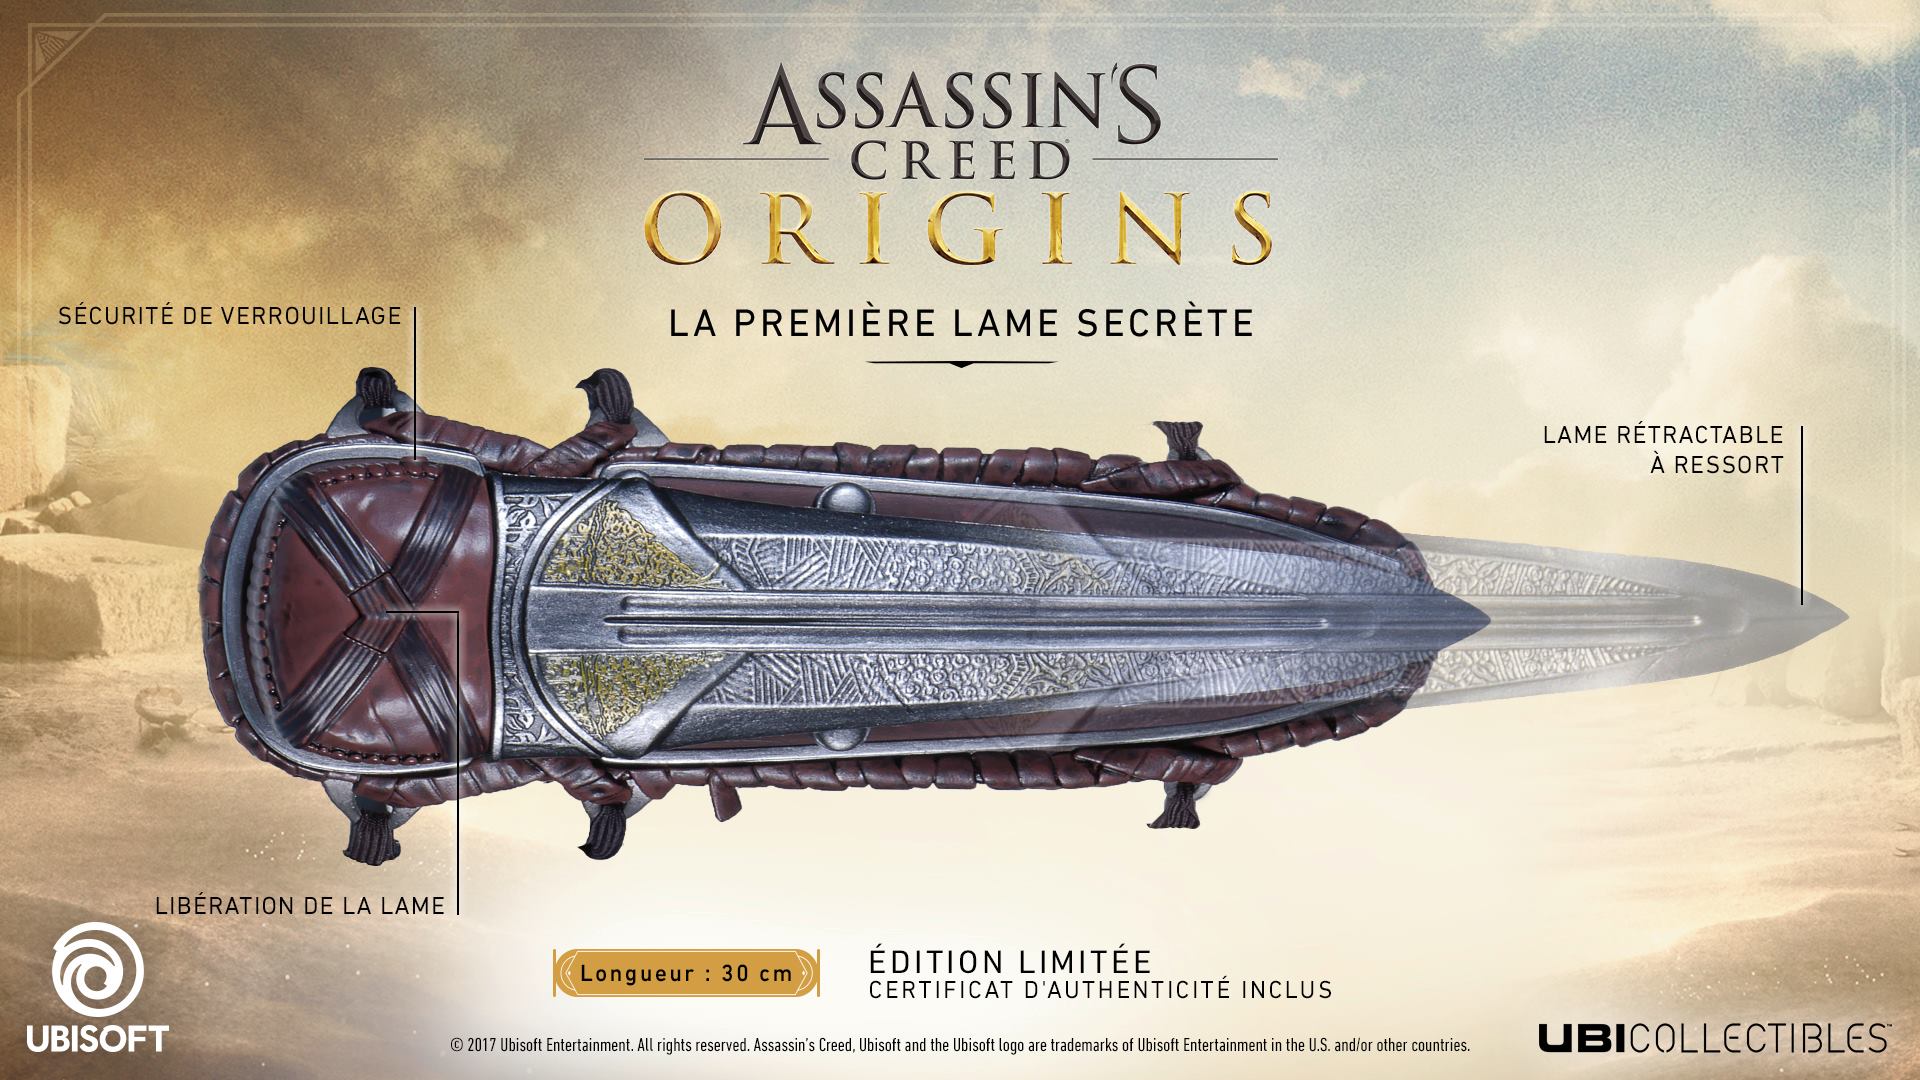 Assassin-creed-origins-first-secret-blade